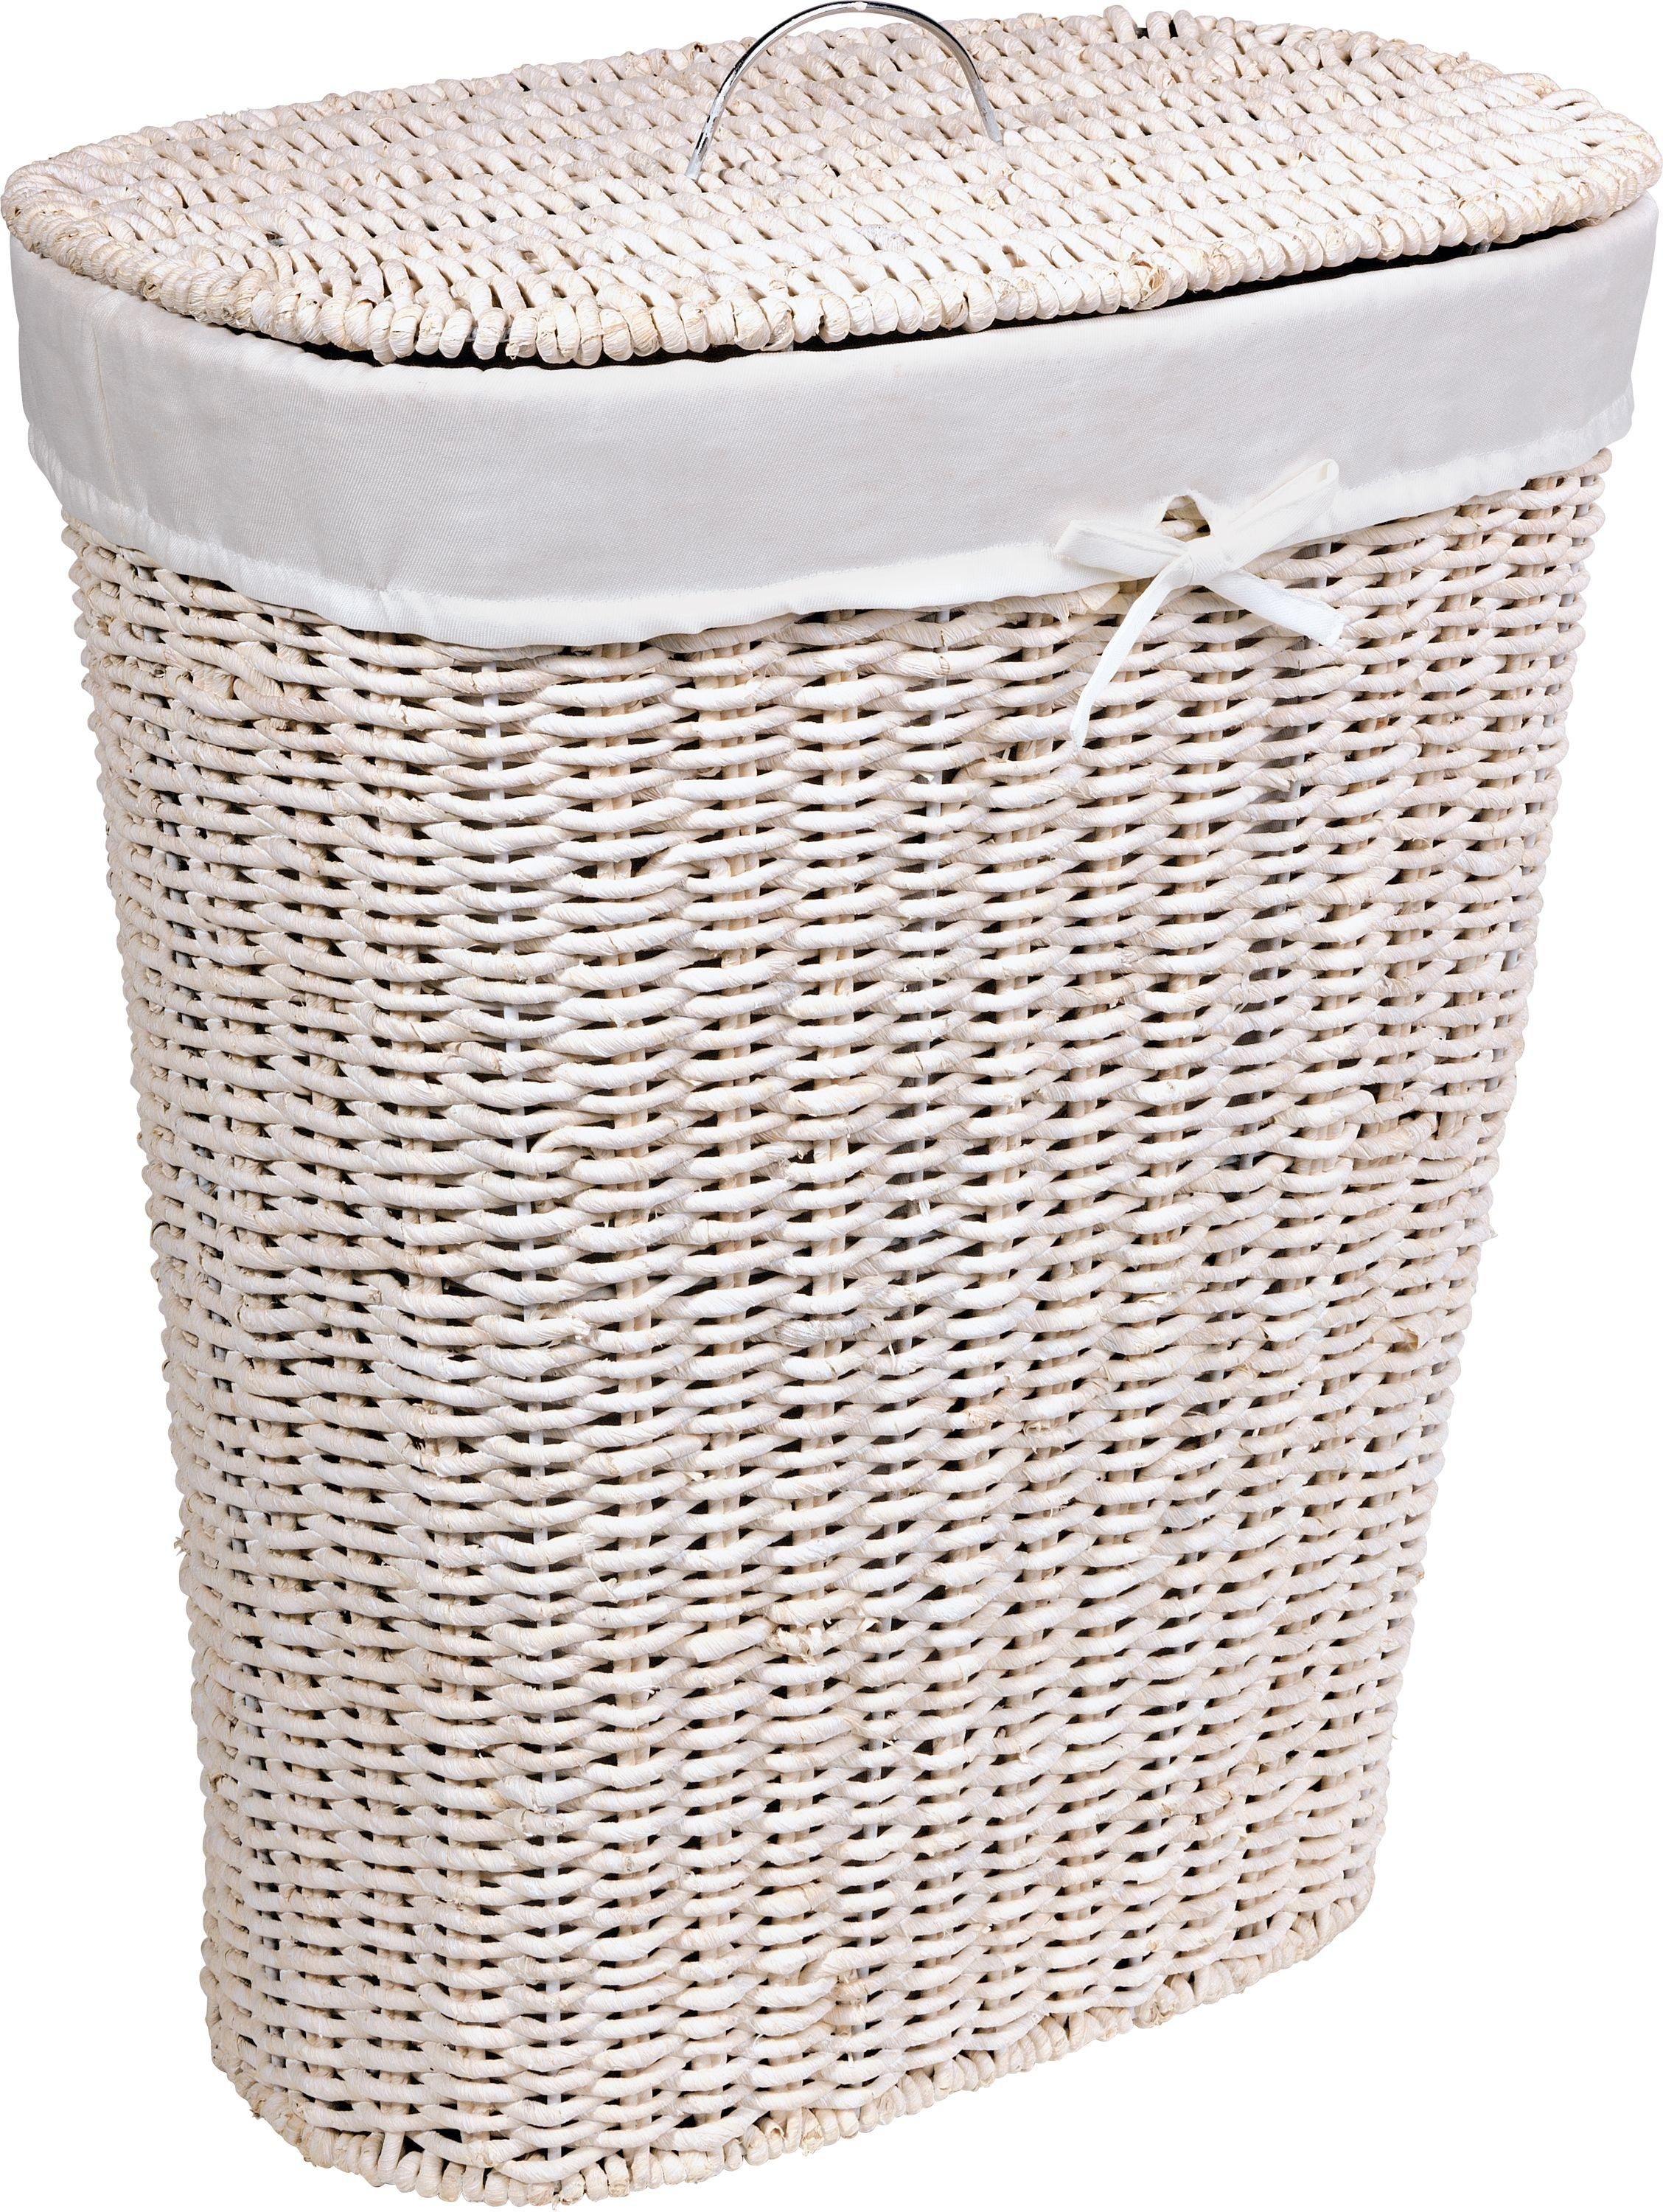 Argos Home 75 Litre Seagrass Laundry Basket - White